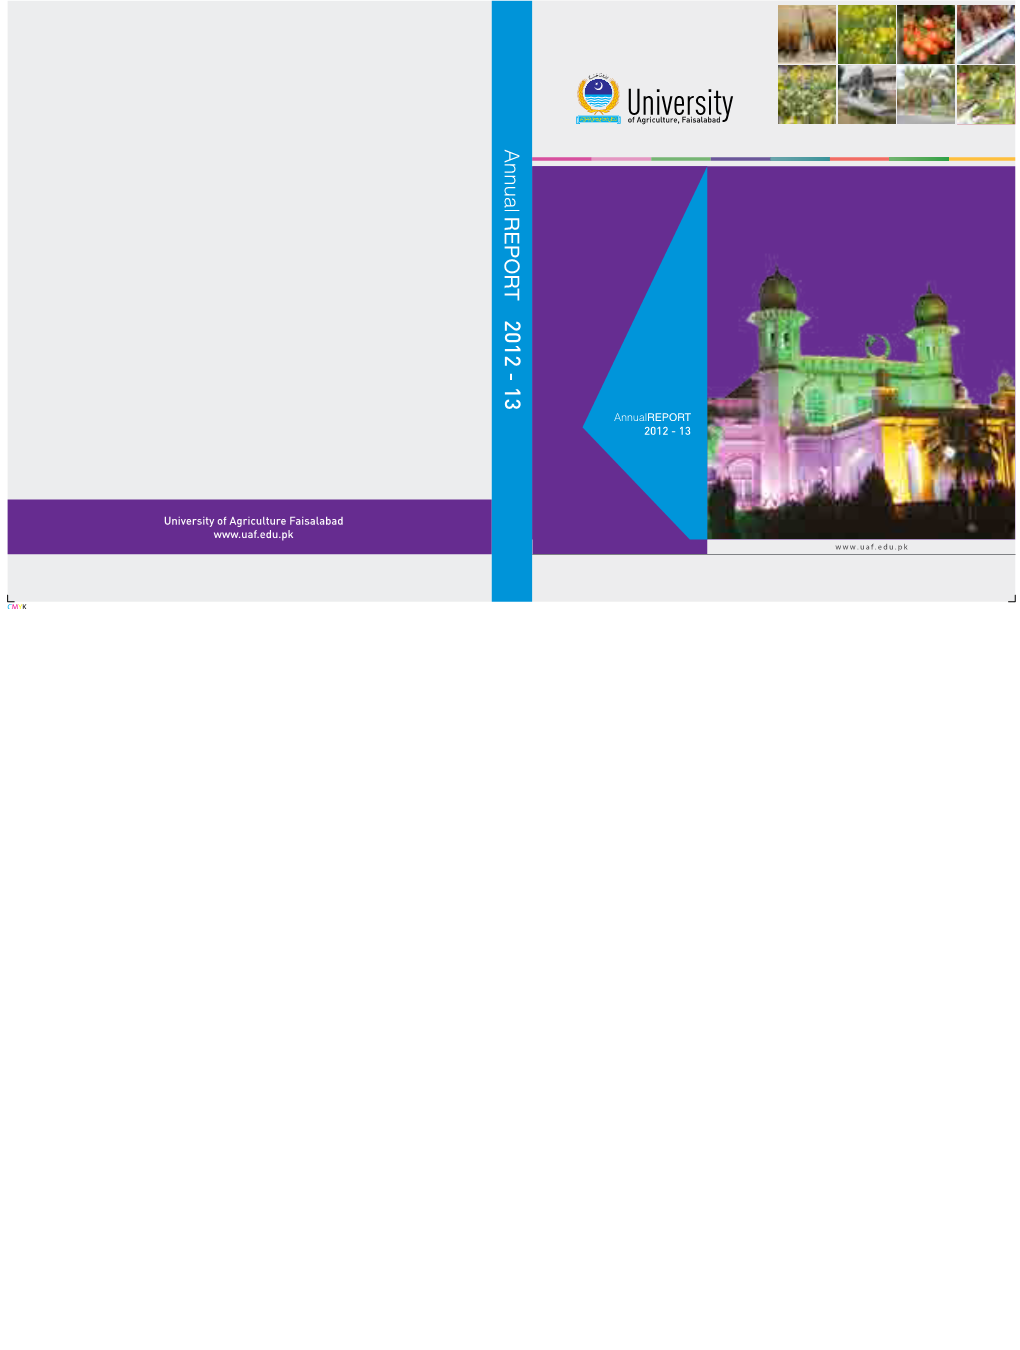 Annual Report | 2010-11 2012